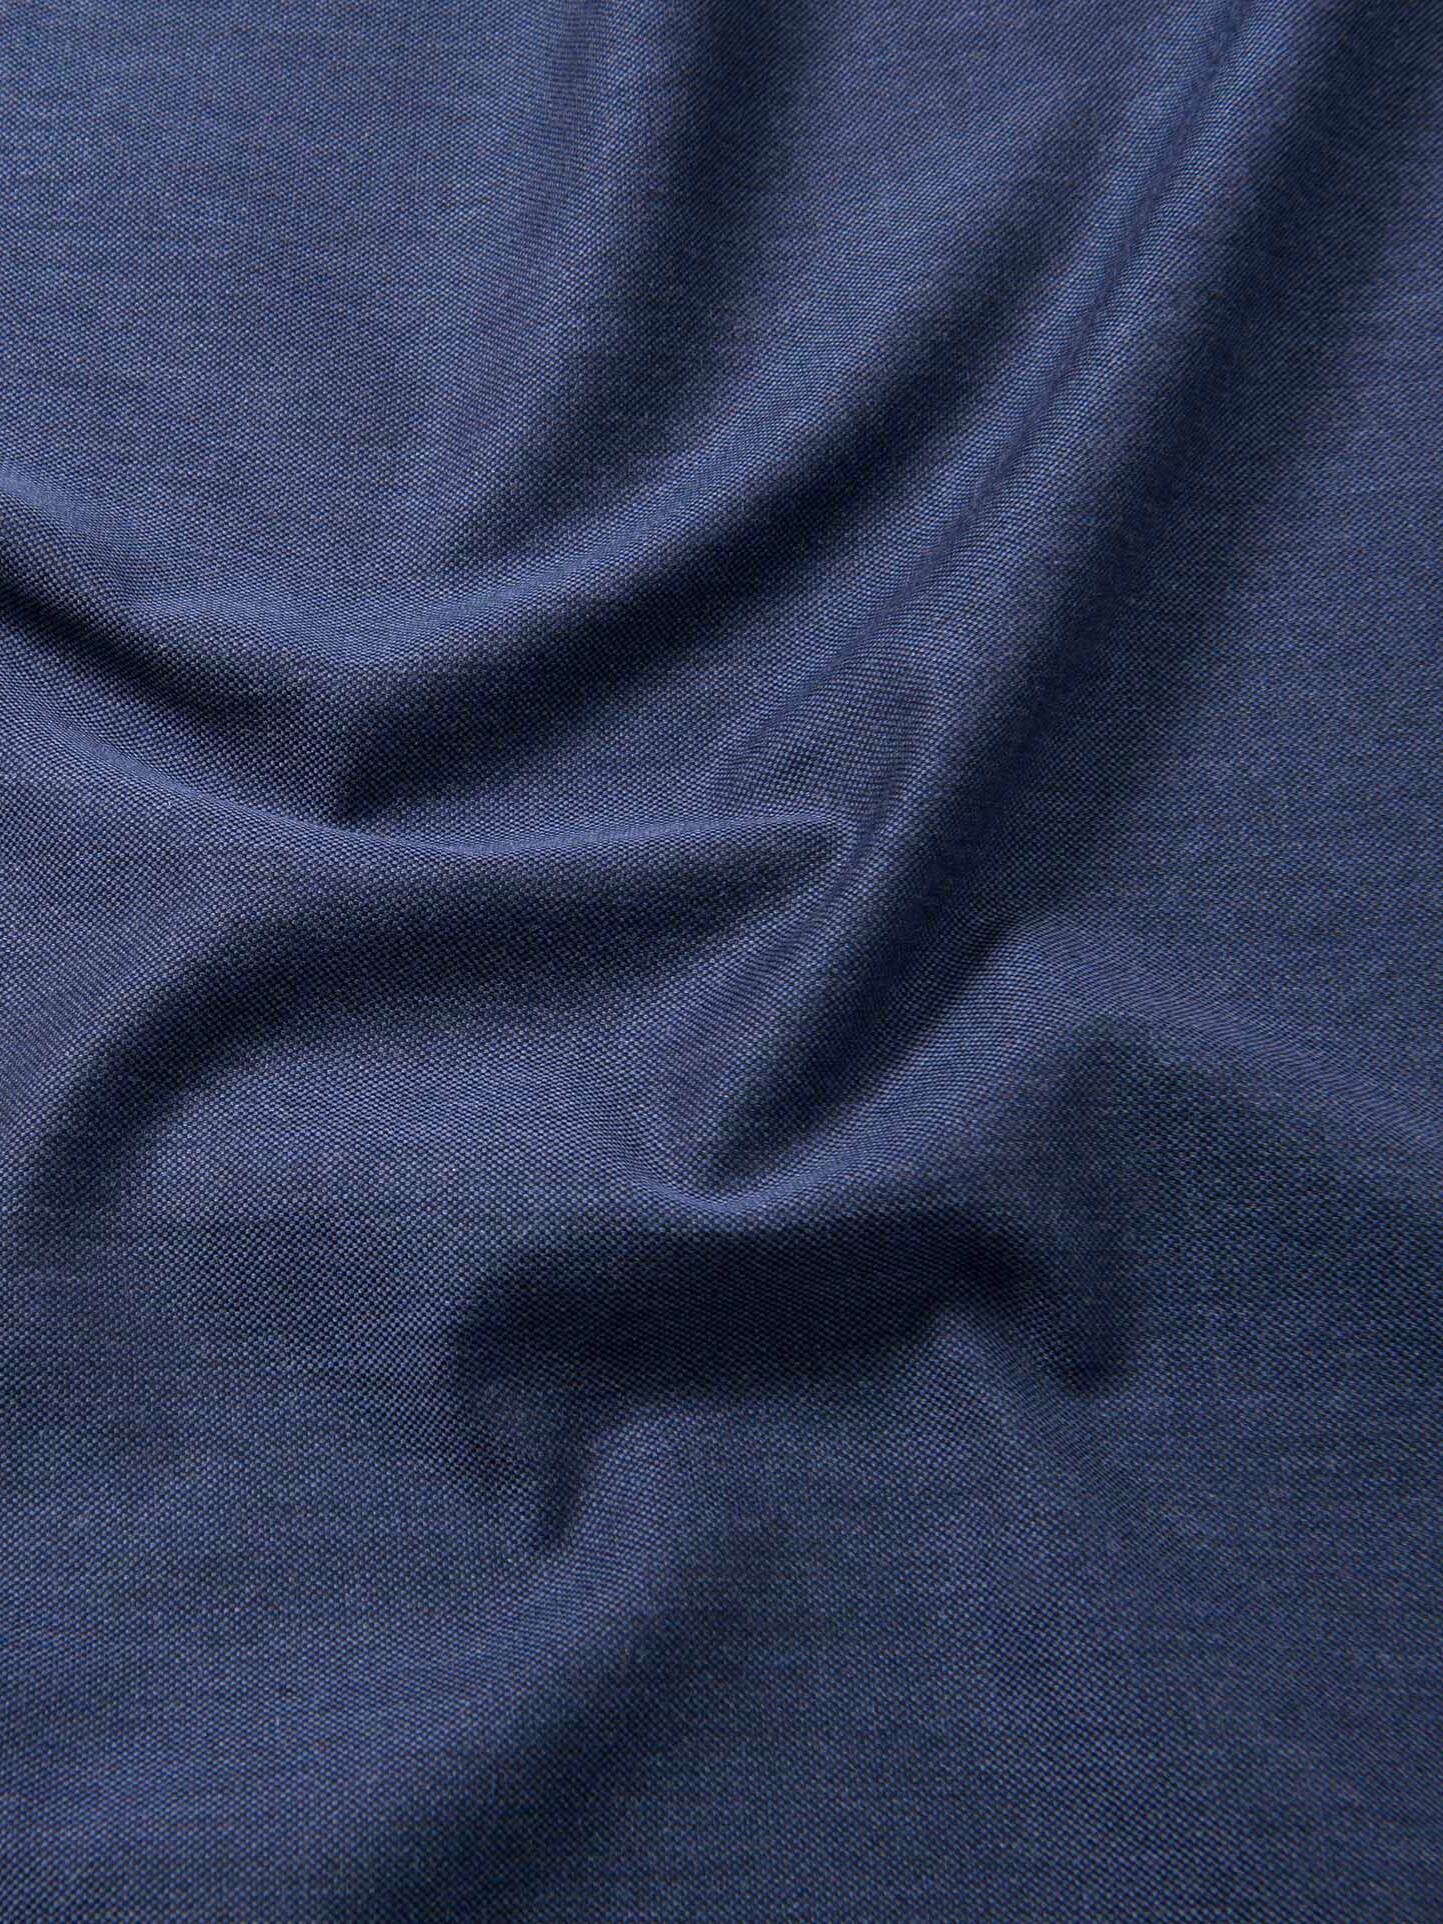 Navy Melange Oxford Shirts by Proper Cloth